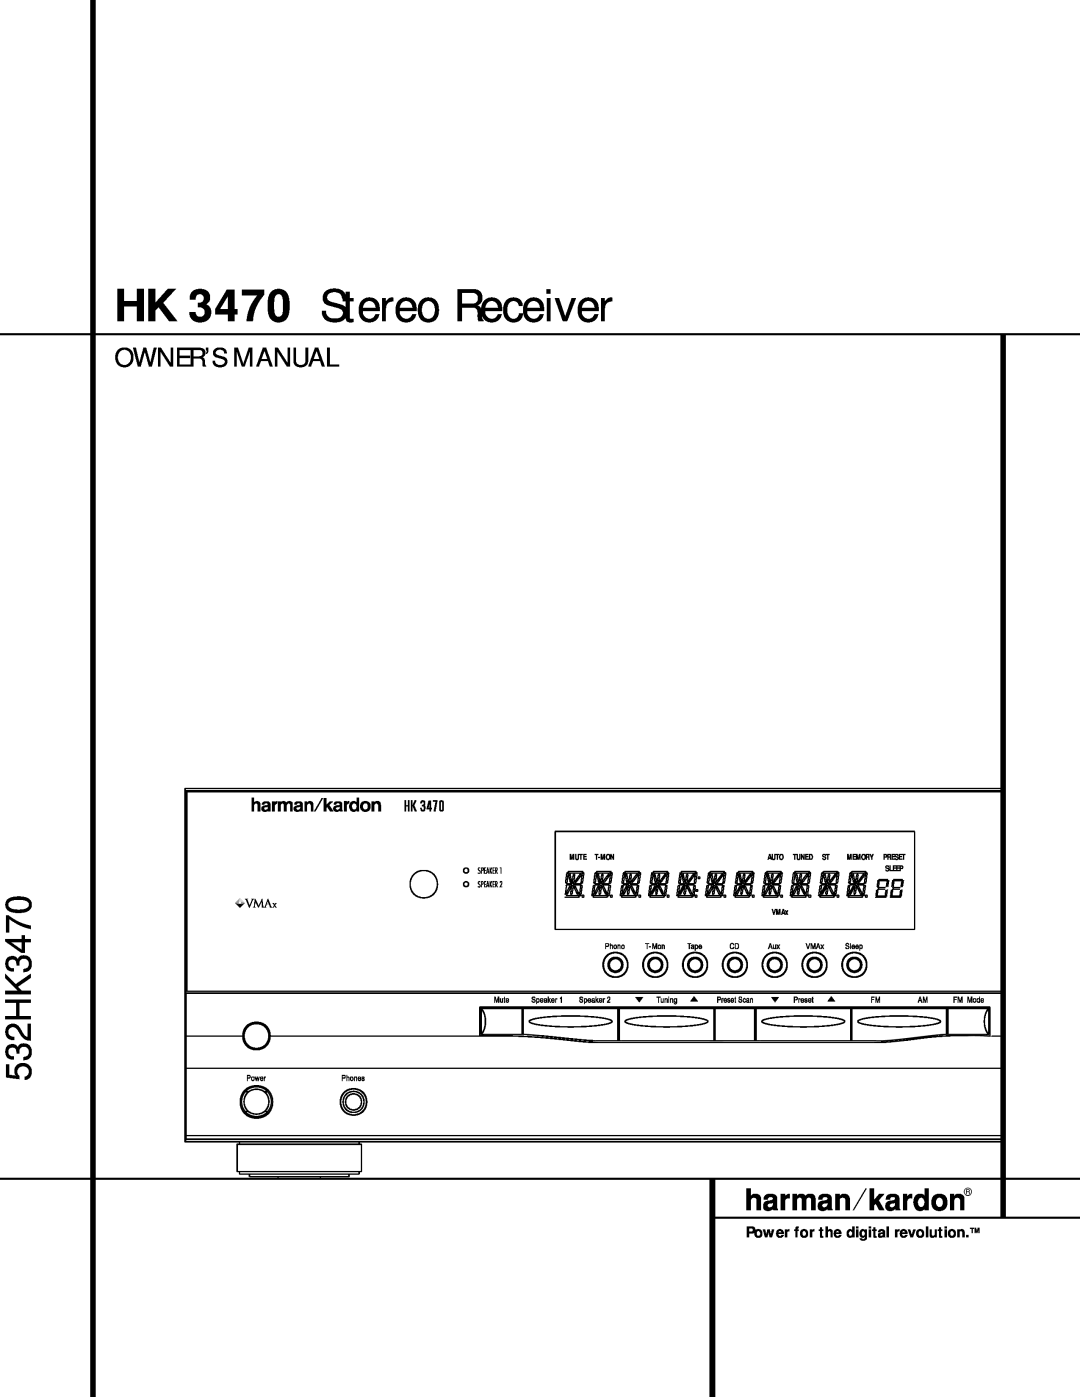 Harman-Kardon owner manual HK 3470 Stereo Receiver, Mute T-Mon, Auto, Tuned St, Sleep, VMAx, Memory Preset 